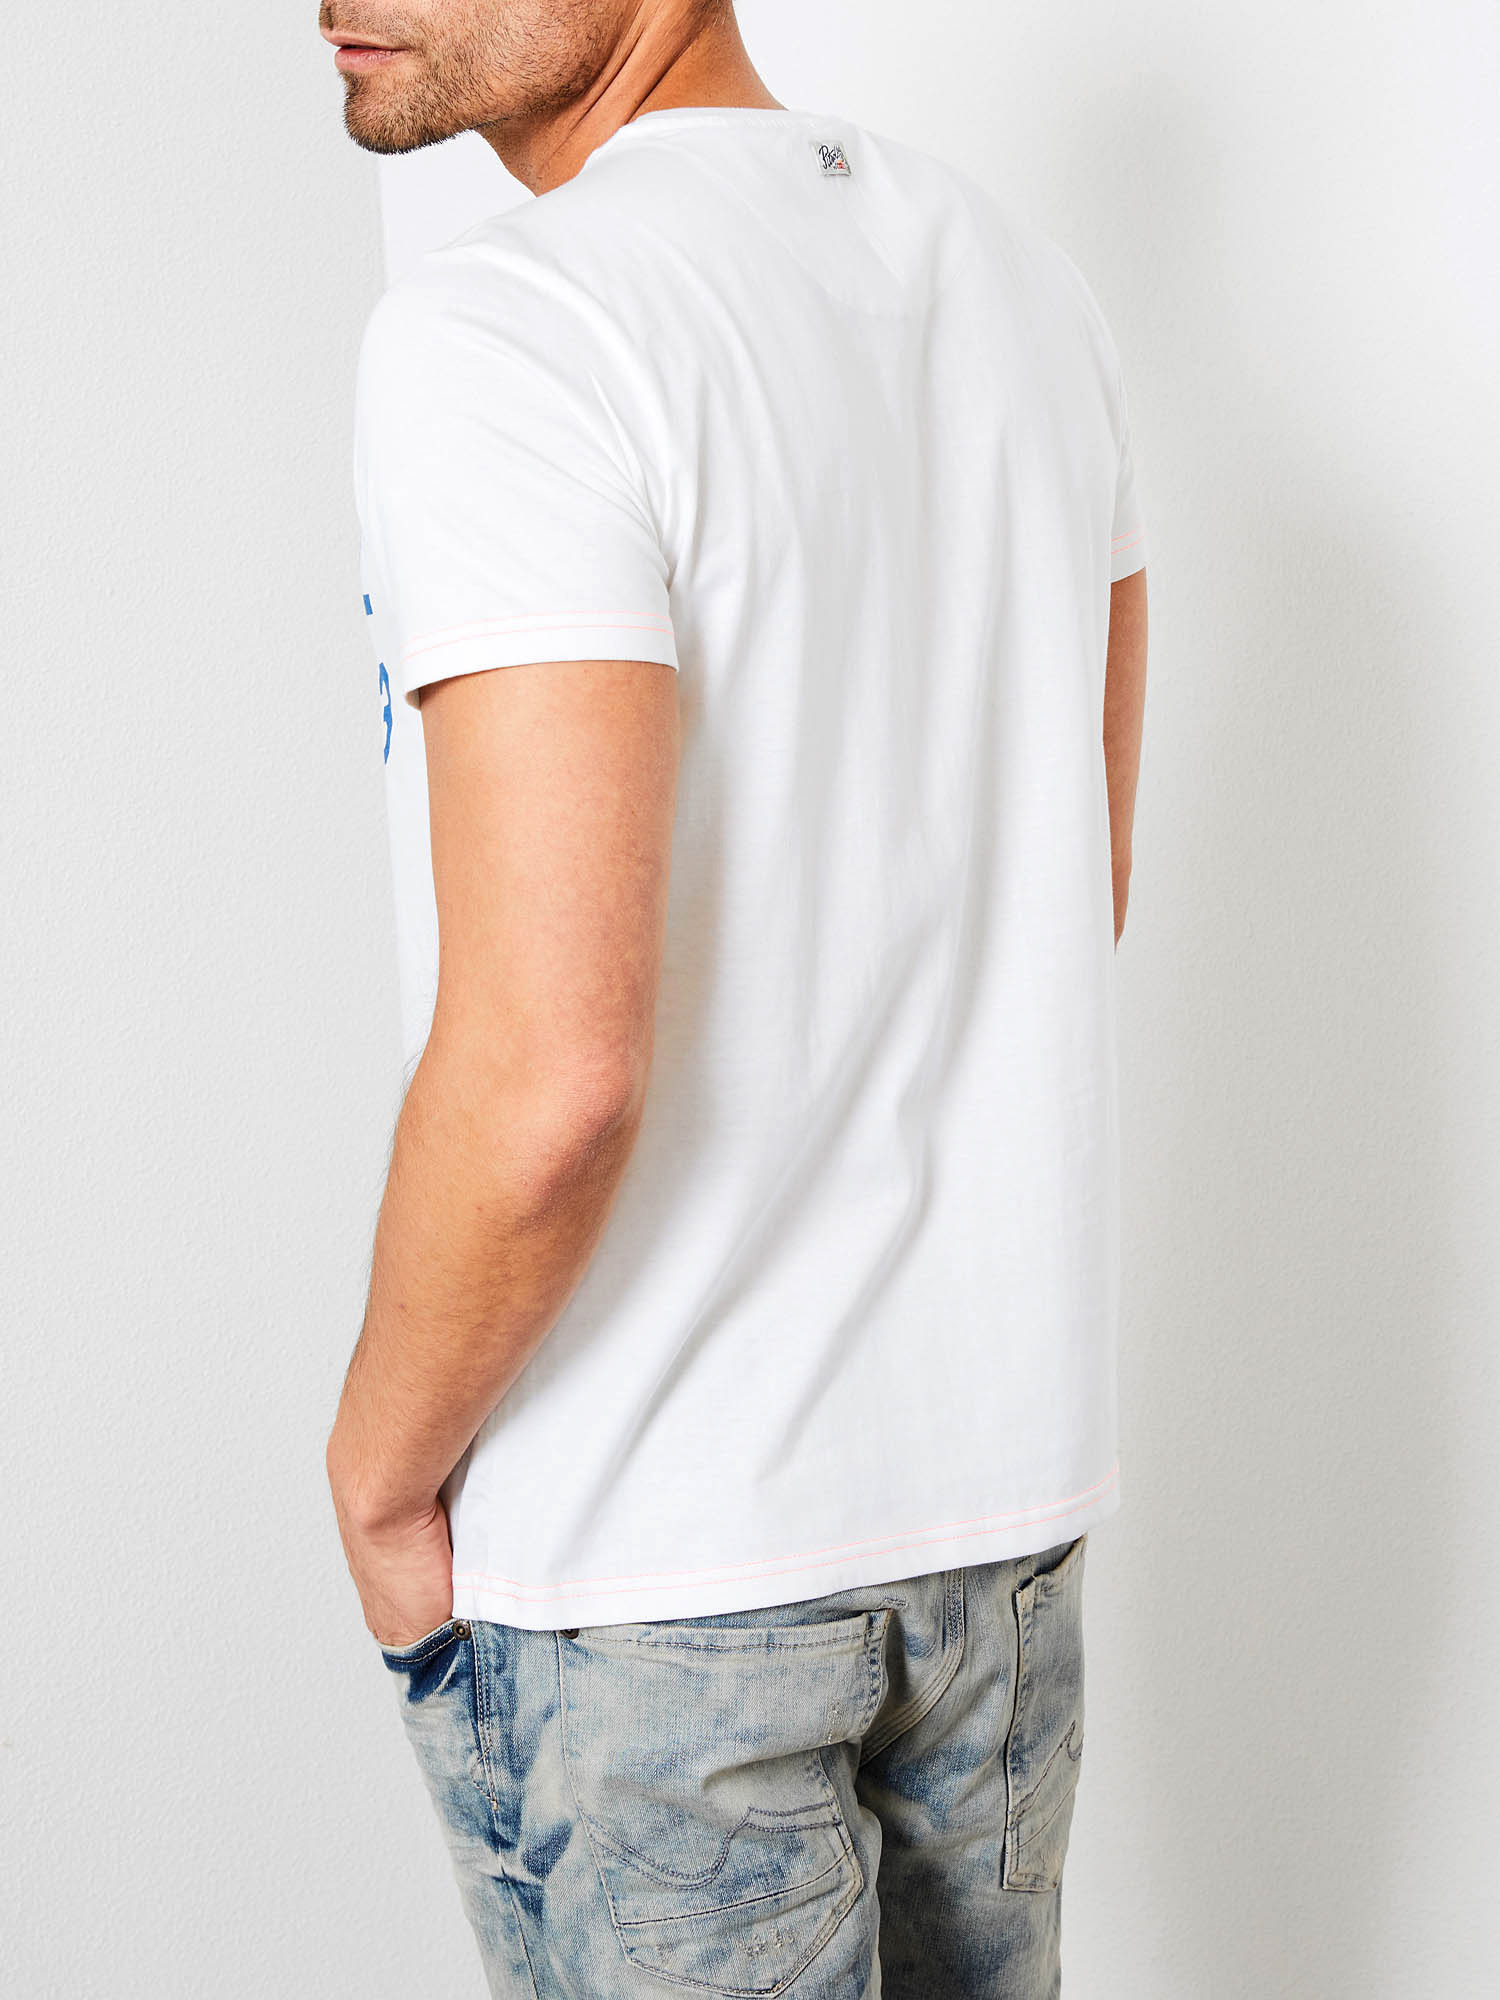 Petrol Industries Artwork Menswear J White Bright T-shirt - Style